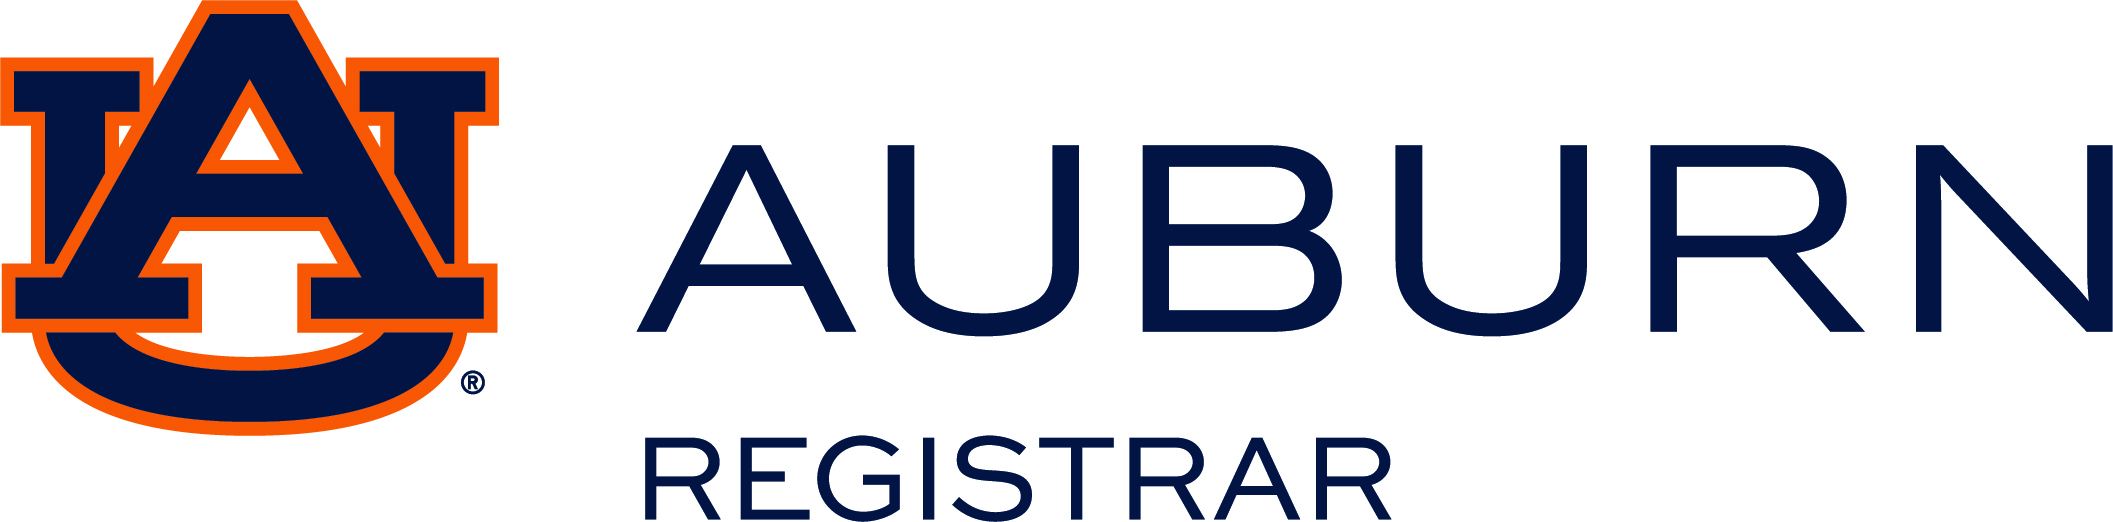 Auburn University Registrar